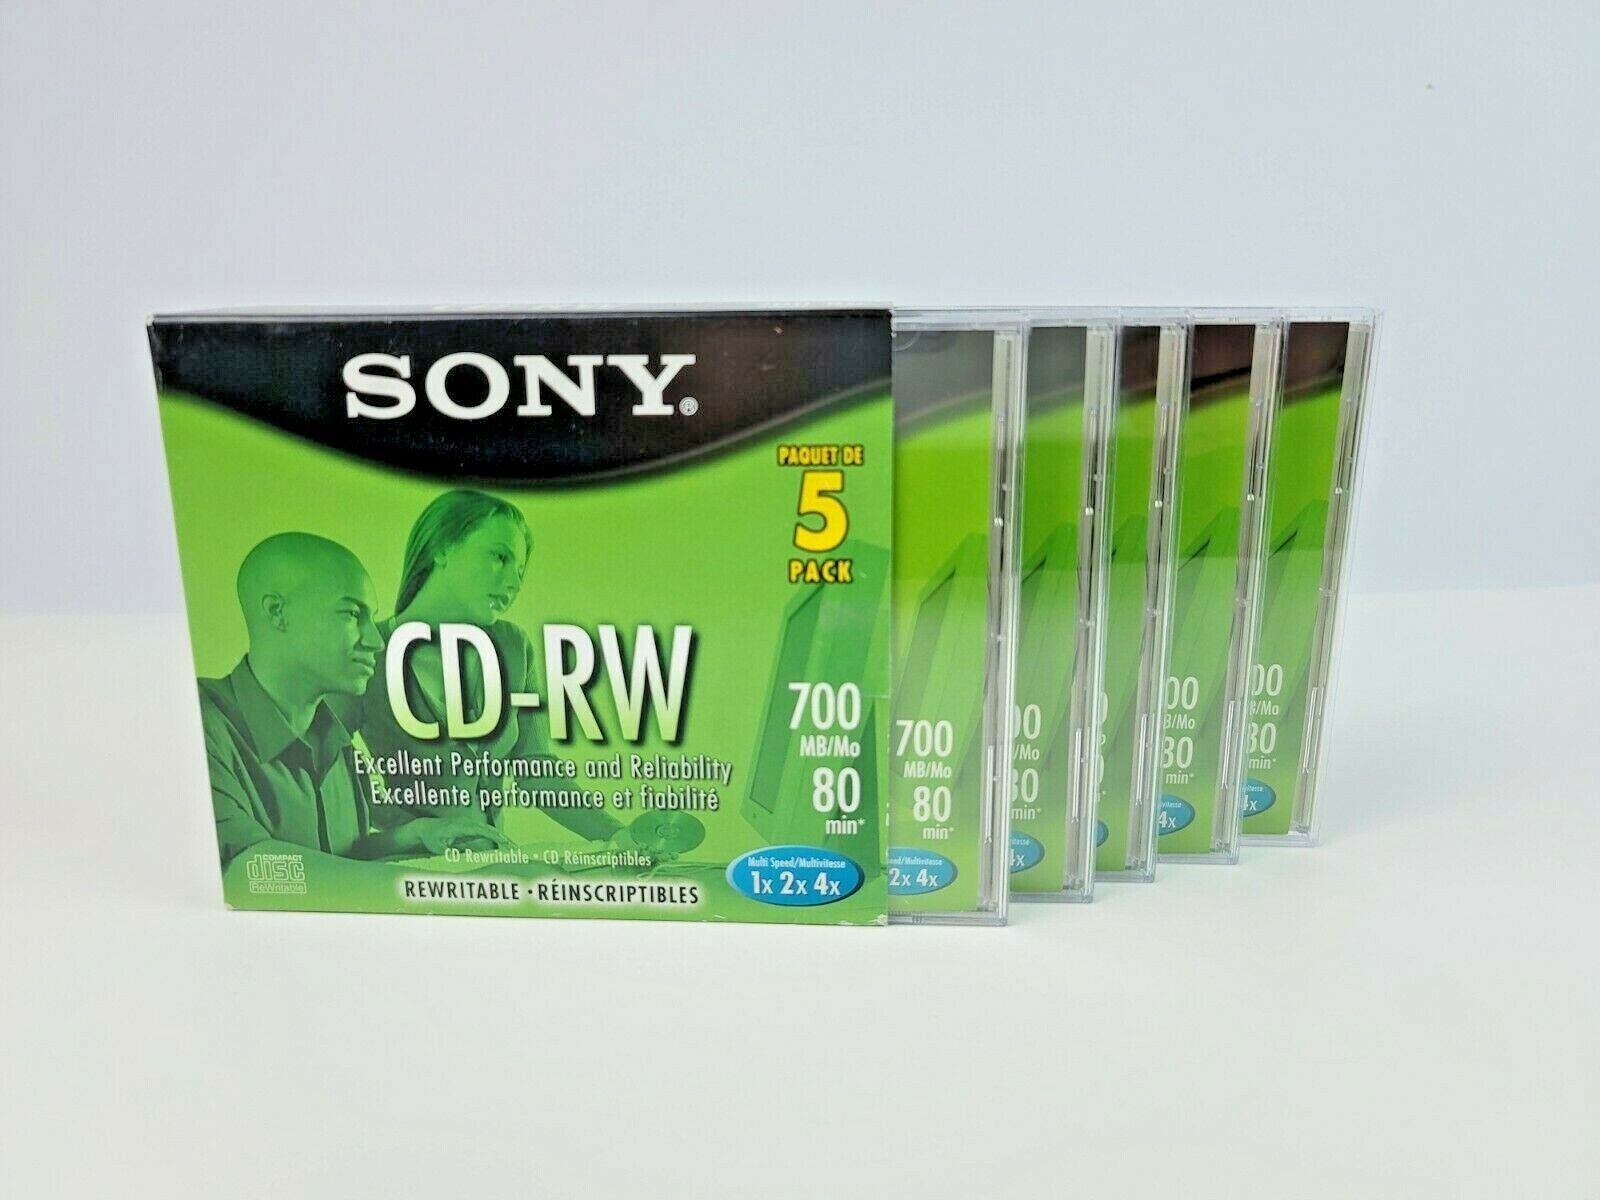 Sony 5 Pk CD-RW Rewritable 700 MB 80 Minute MultiSpeed 1x2x4x Brand NEW - $12.66